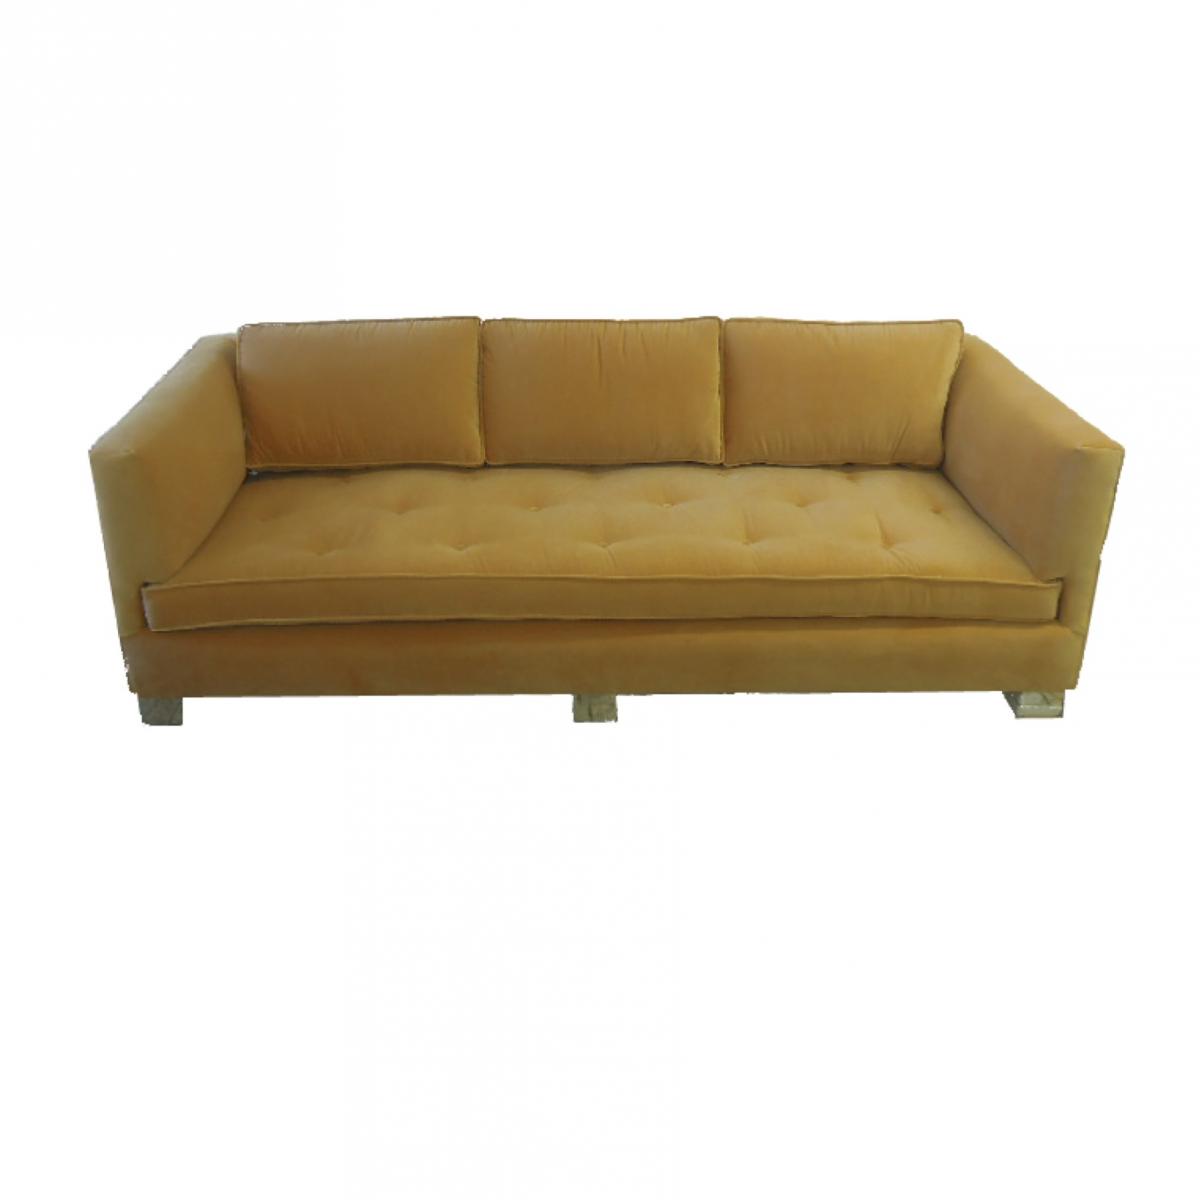 Reupholstered yellow velvet modular sofa with tufting